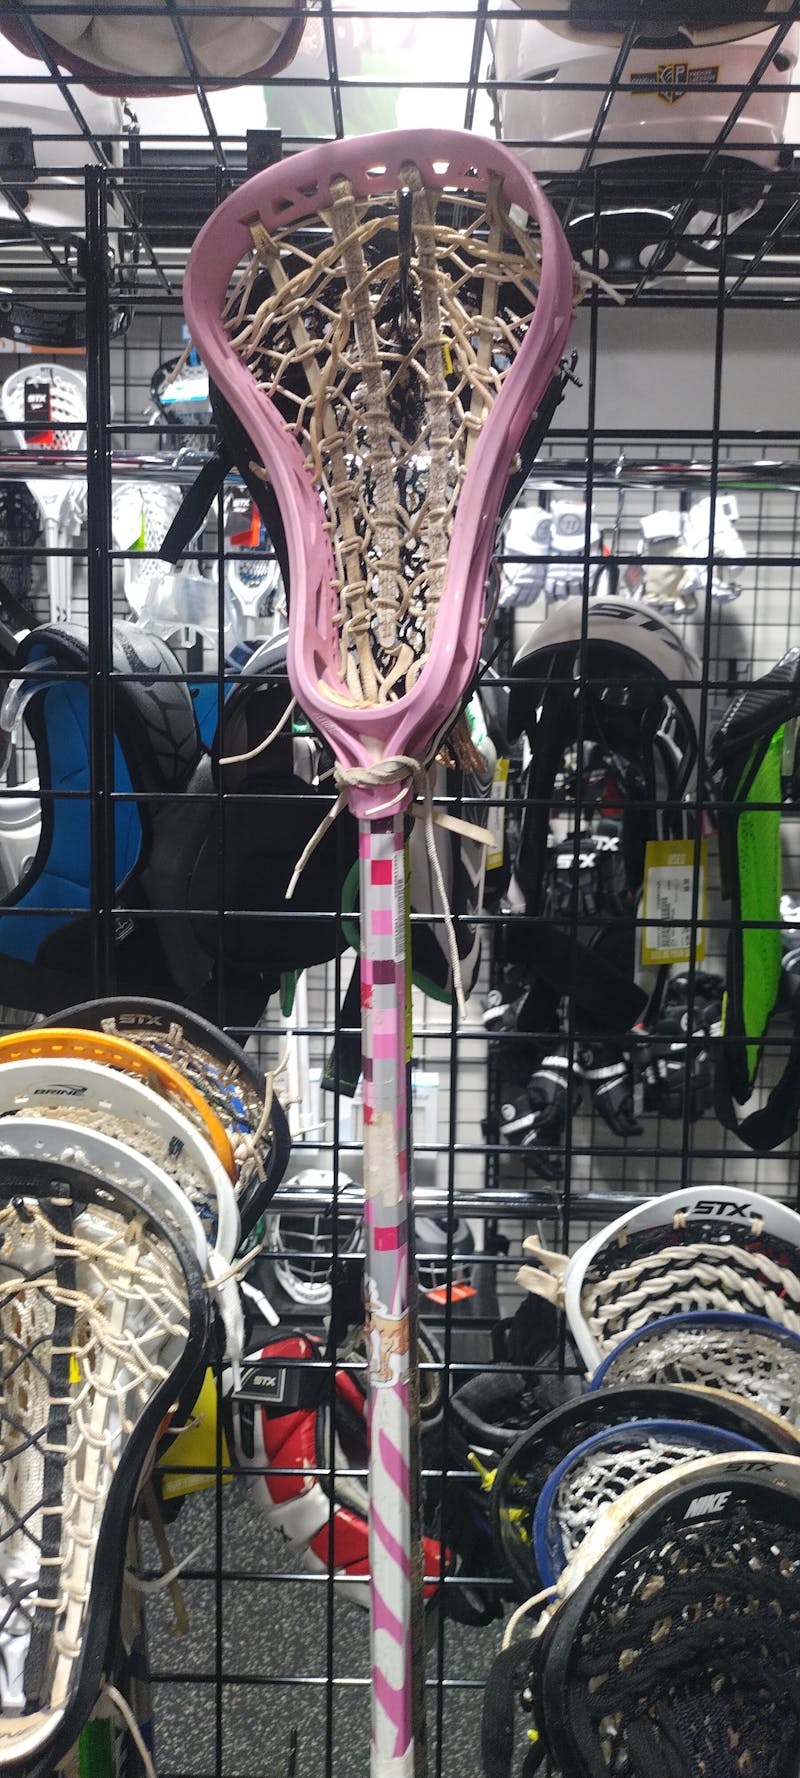 Used Brine STICK Aluminum Women's Complete Lacrosse Sticks